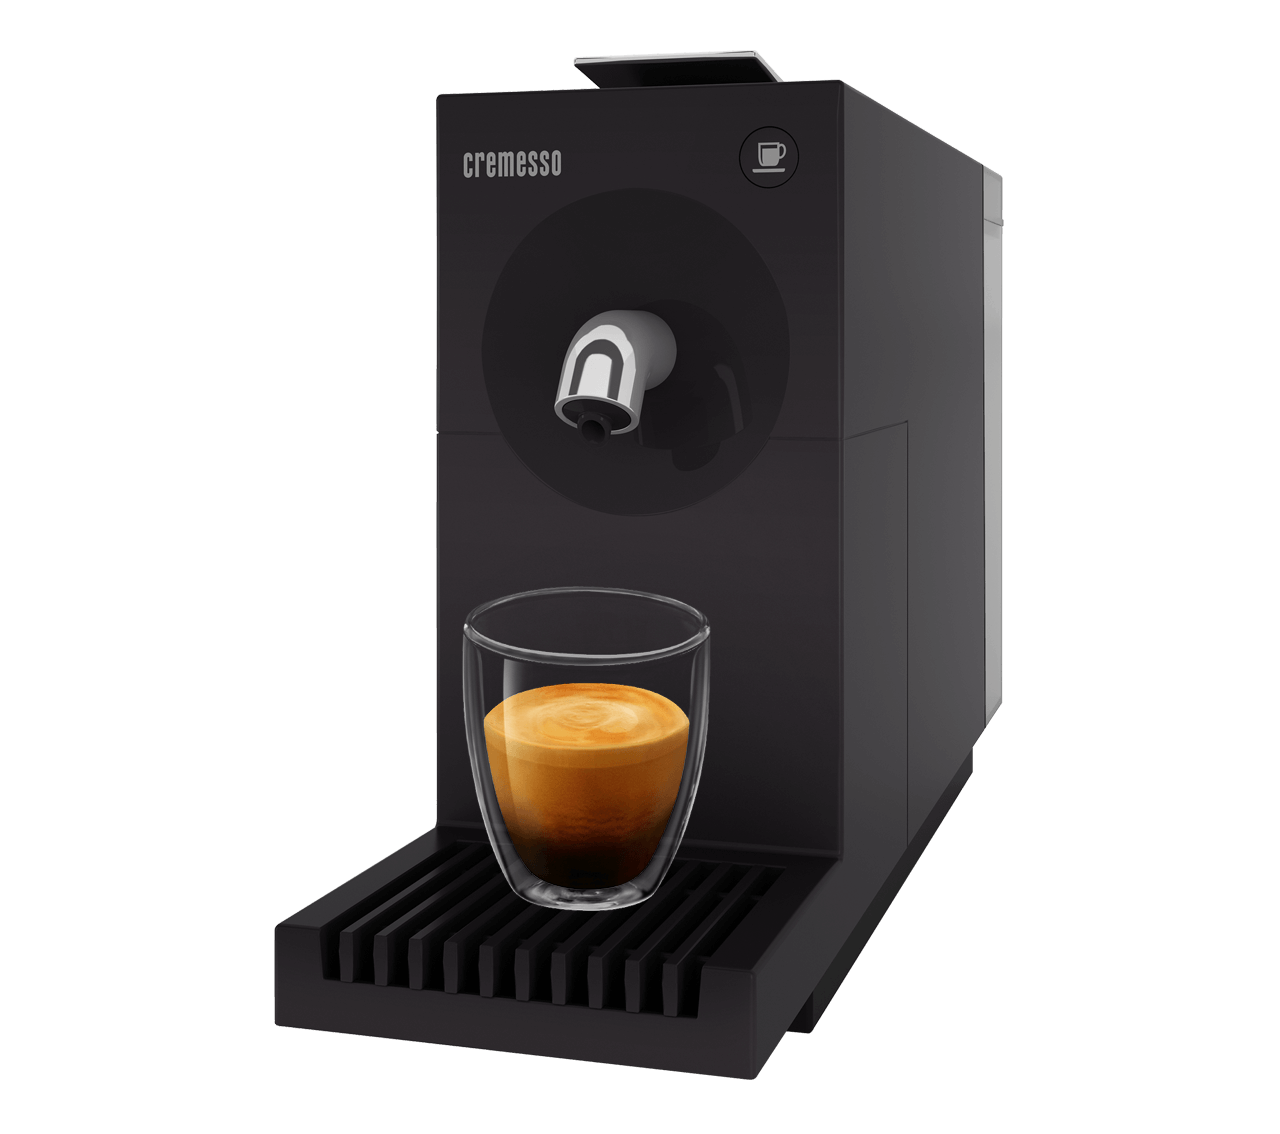 Cremesso Coffee Machine PNG icon